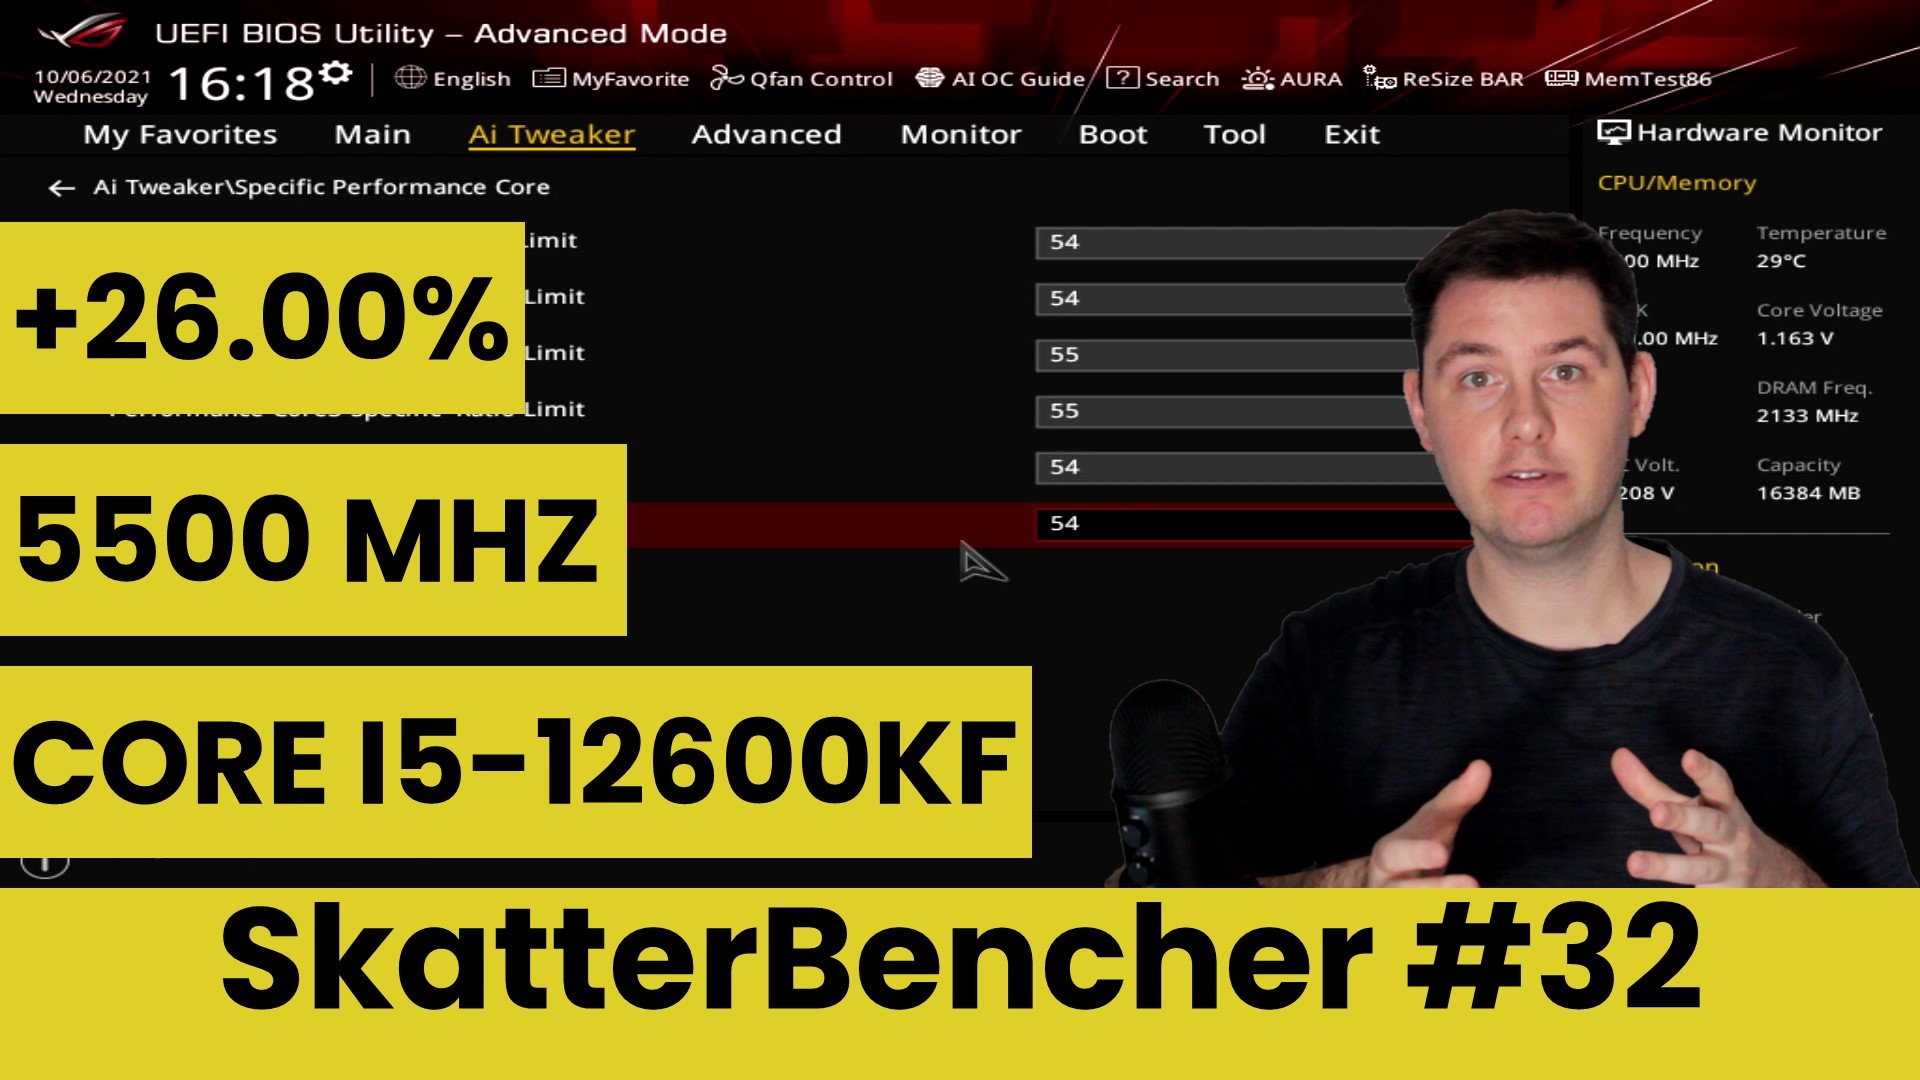 SkatterBencher #32: Intel Core i5-12600KF Overclocked to 5500 MHz